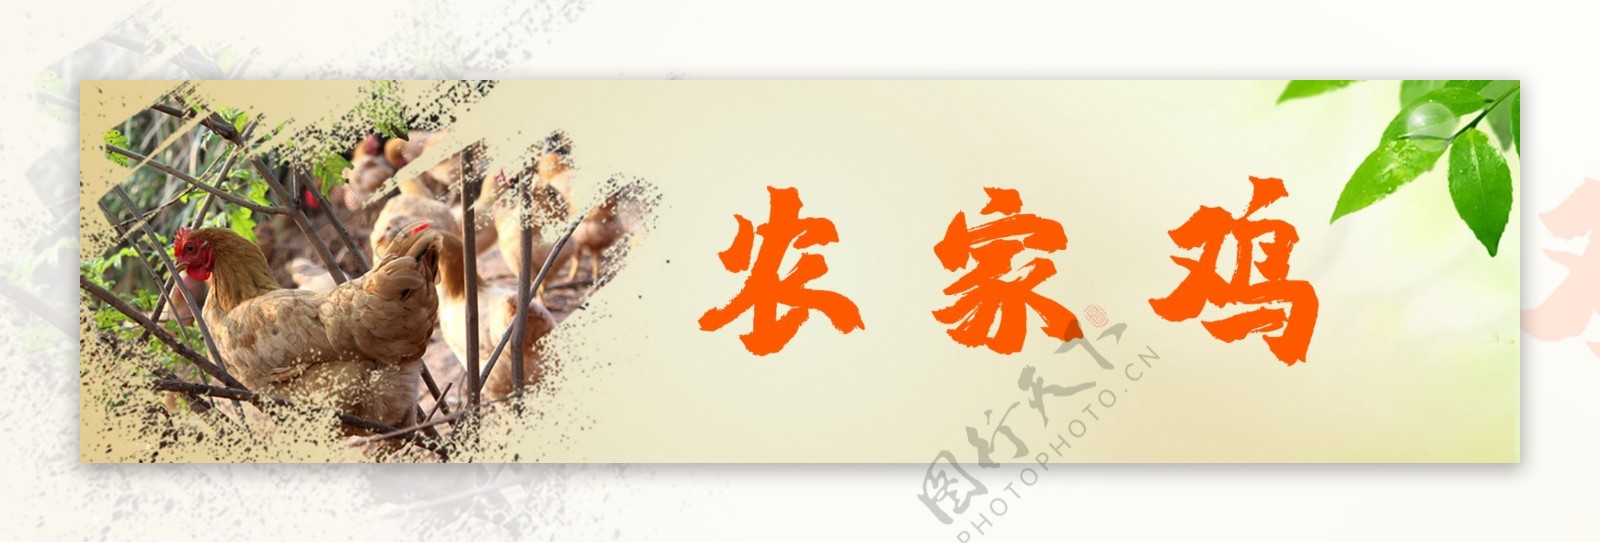 农家鸡banner图片